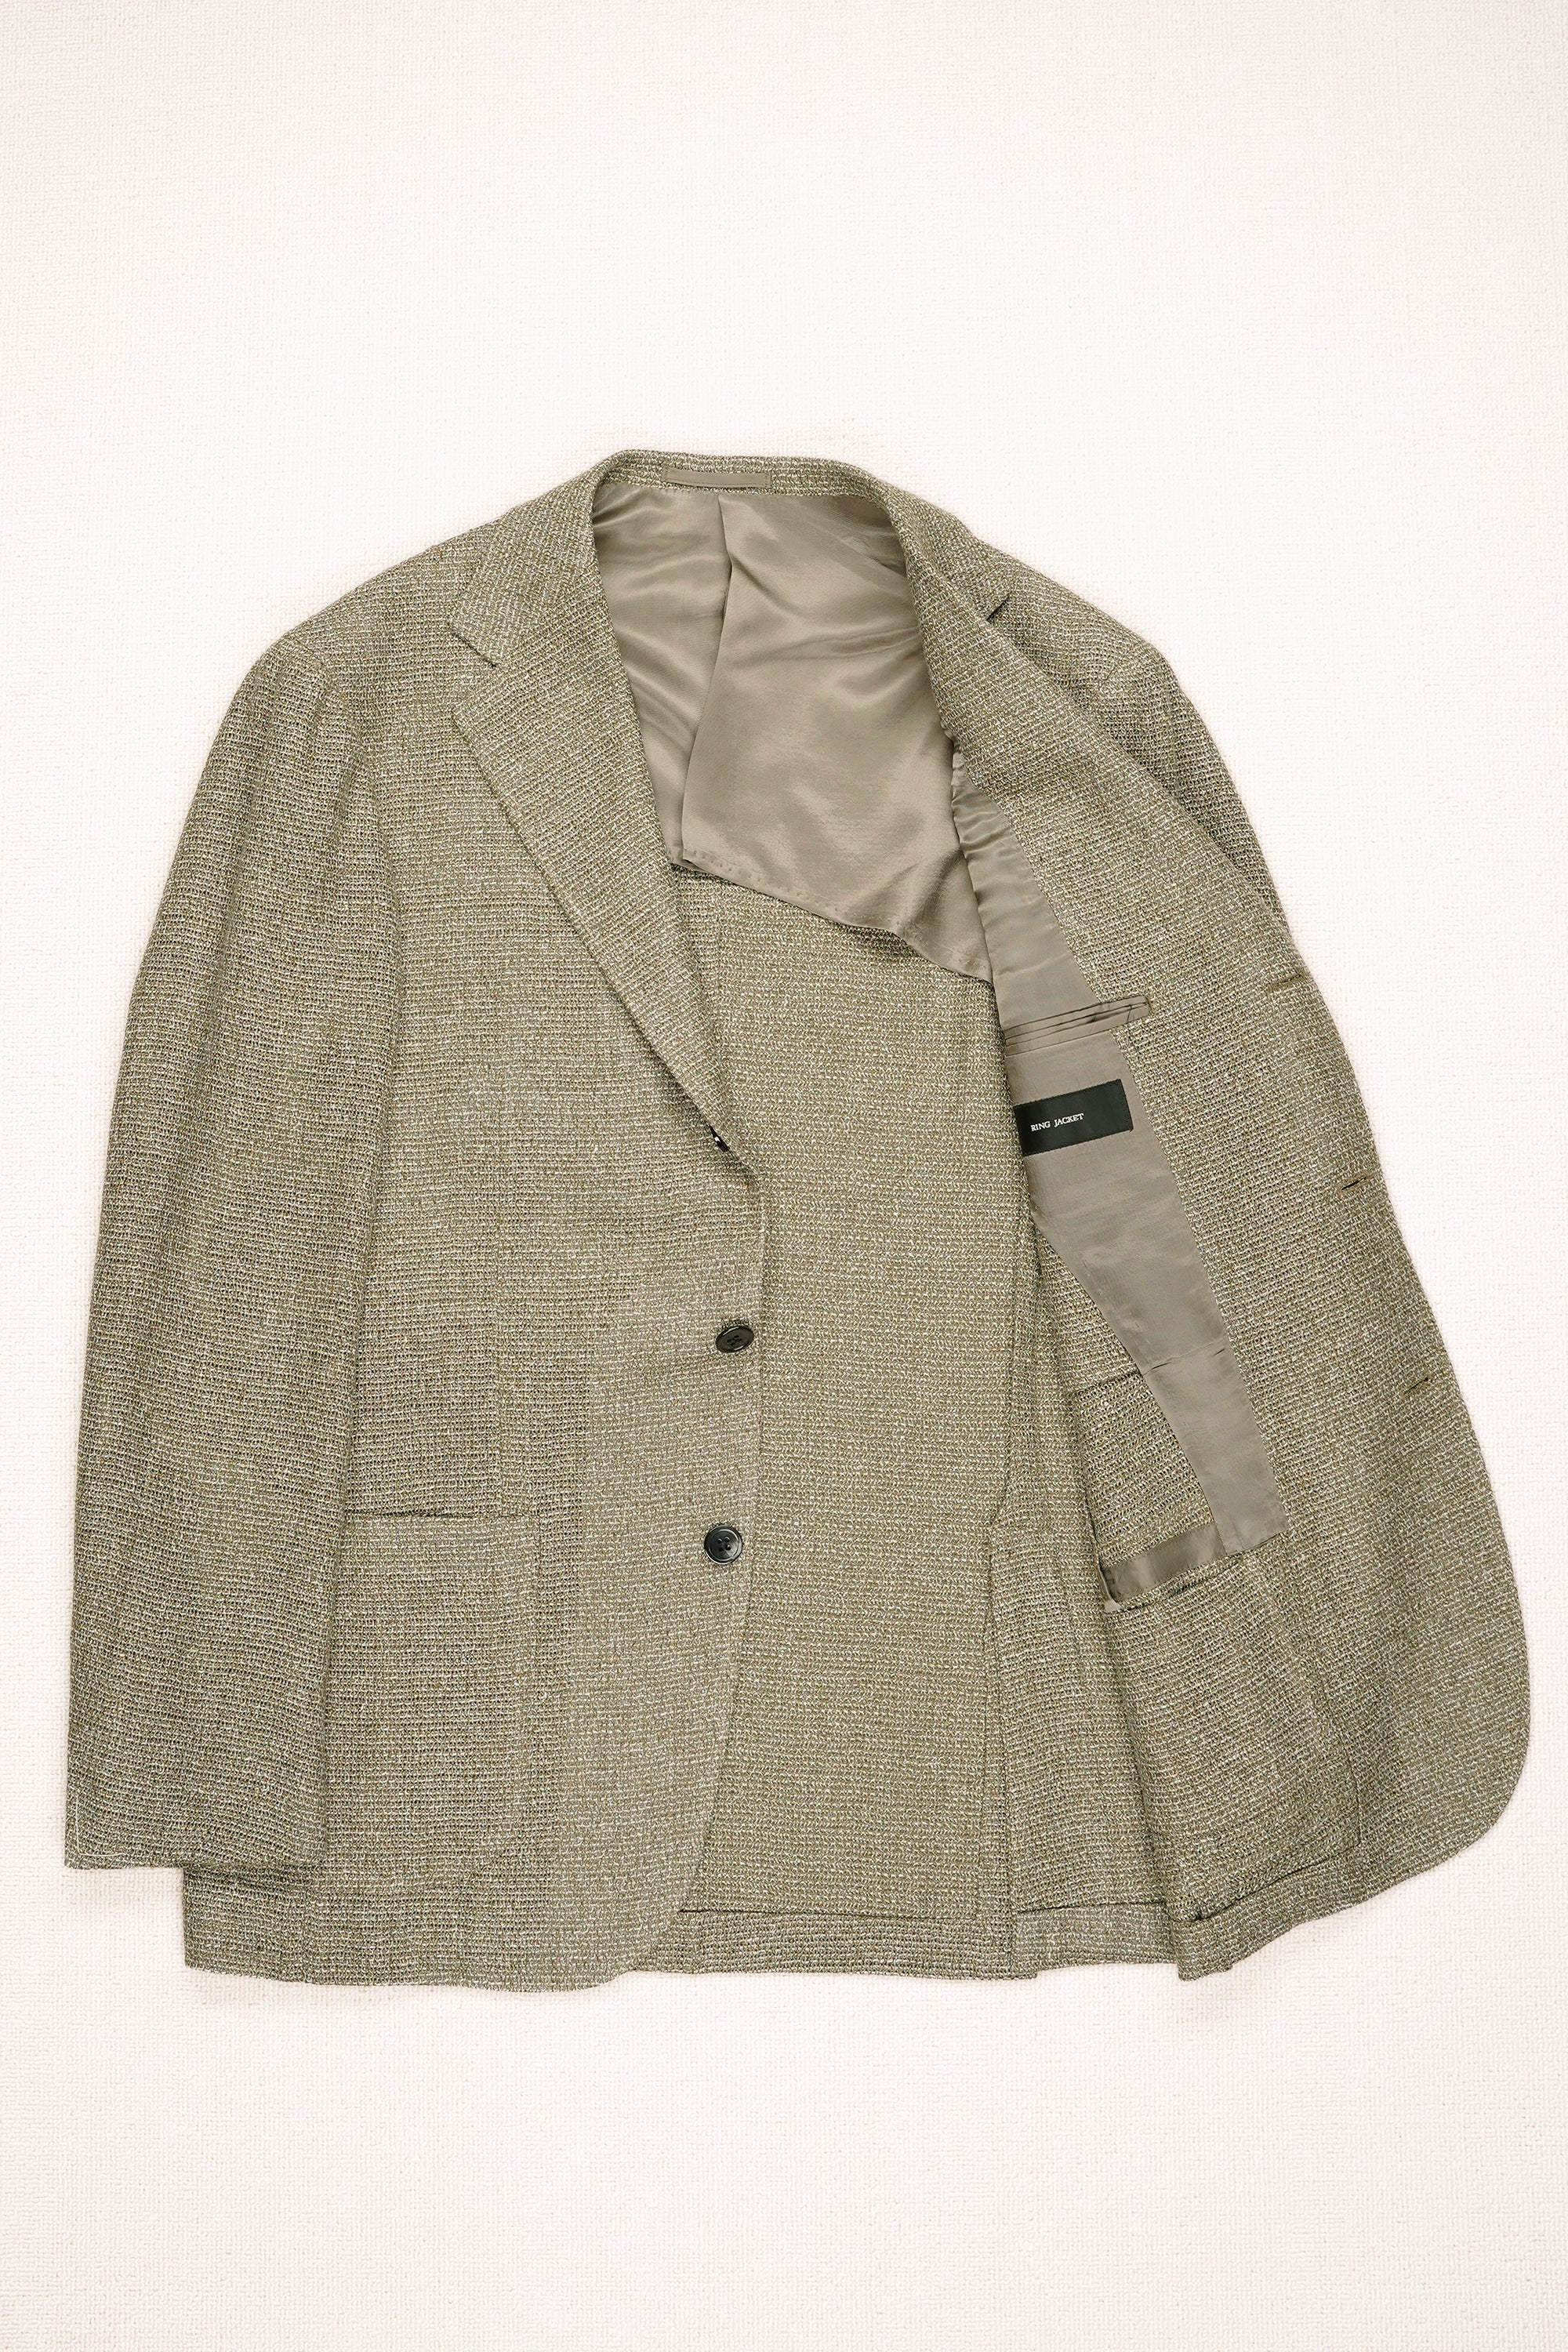 Ring Jacket Model TAJ-02/300 Orchard Green Silk/Linen Sport Coat